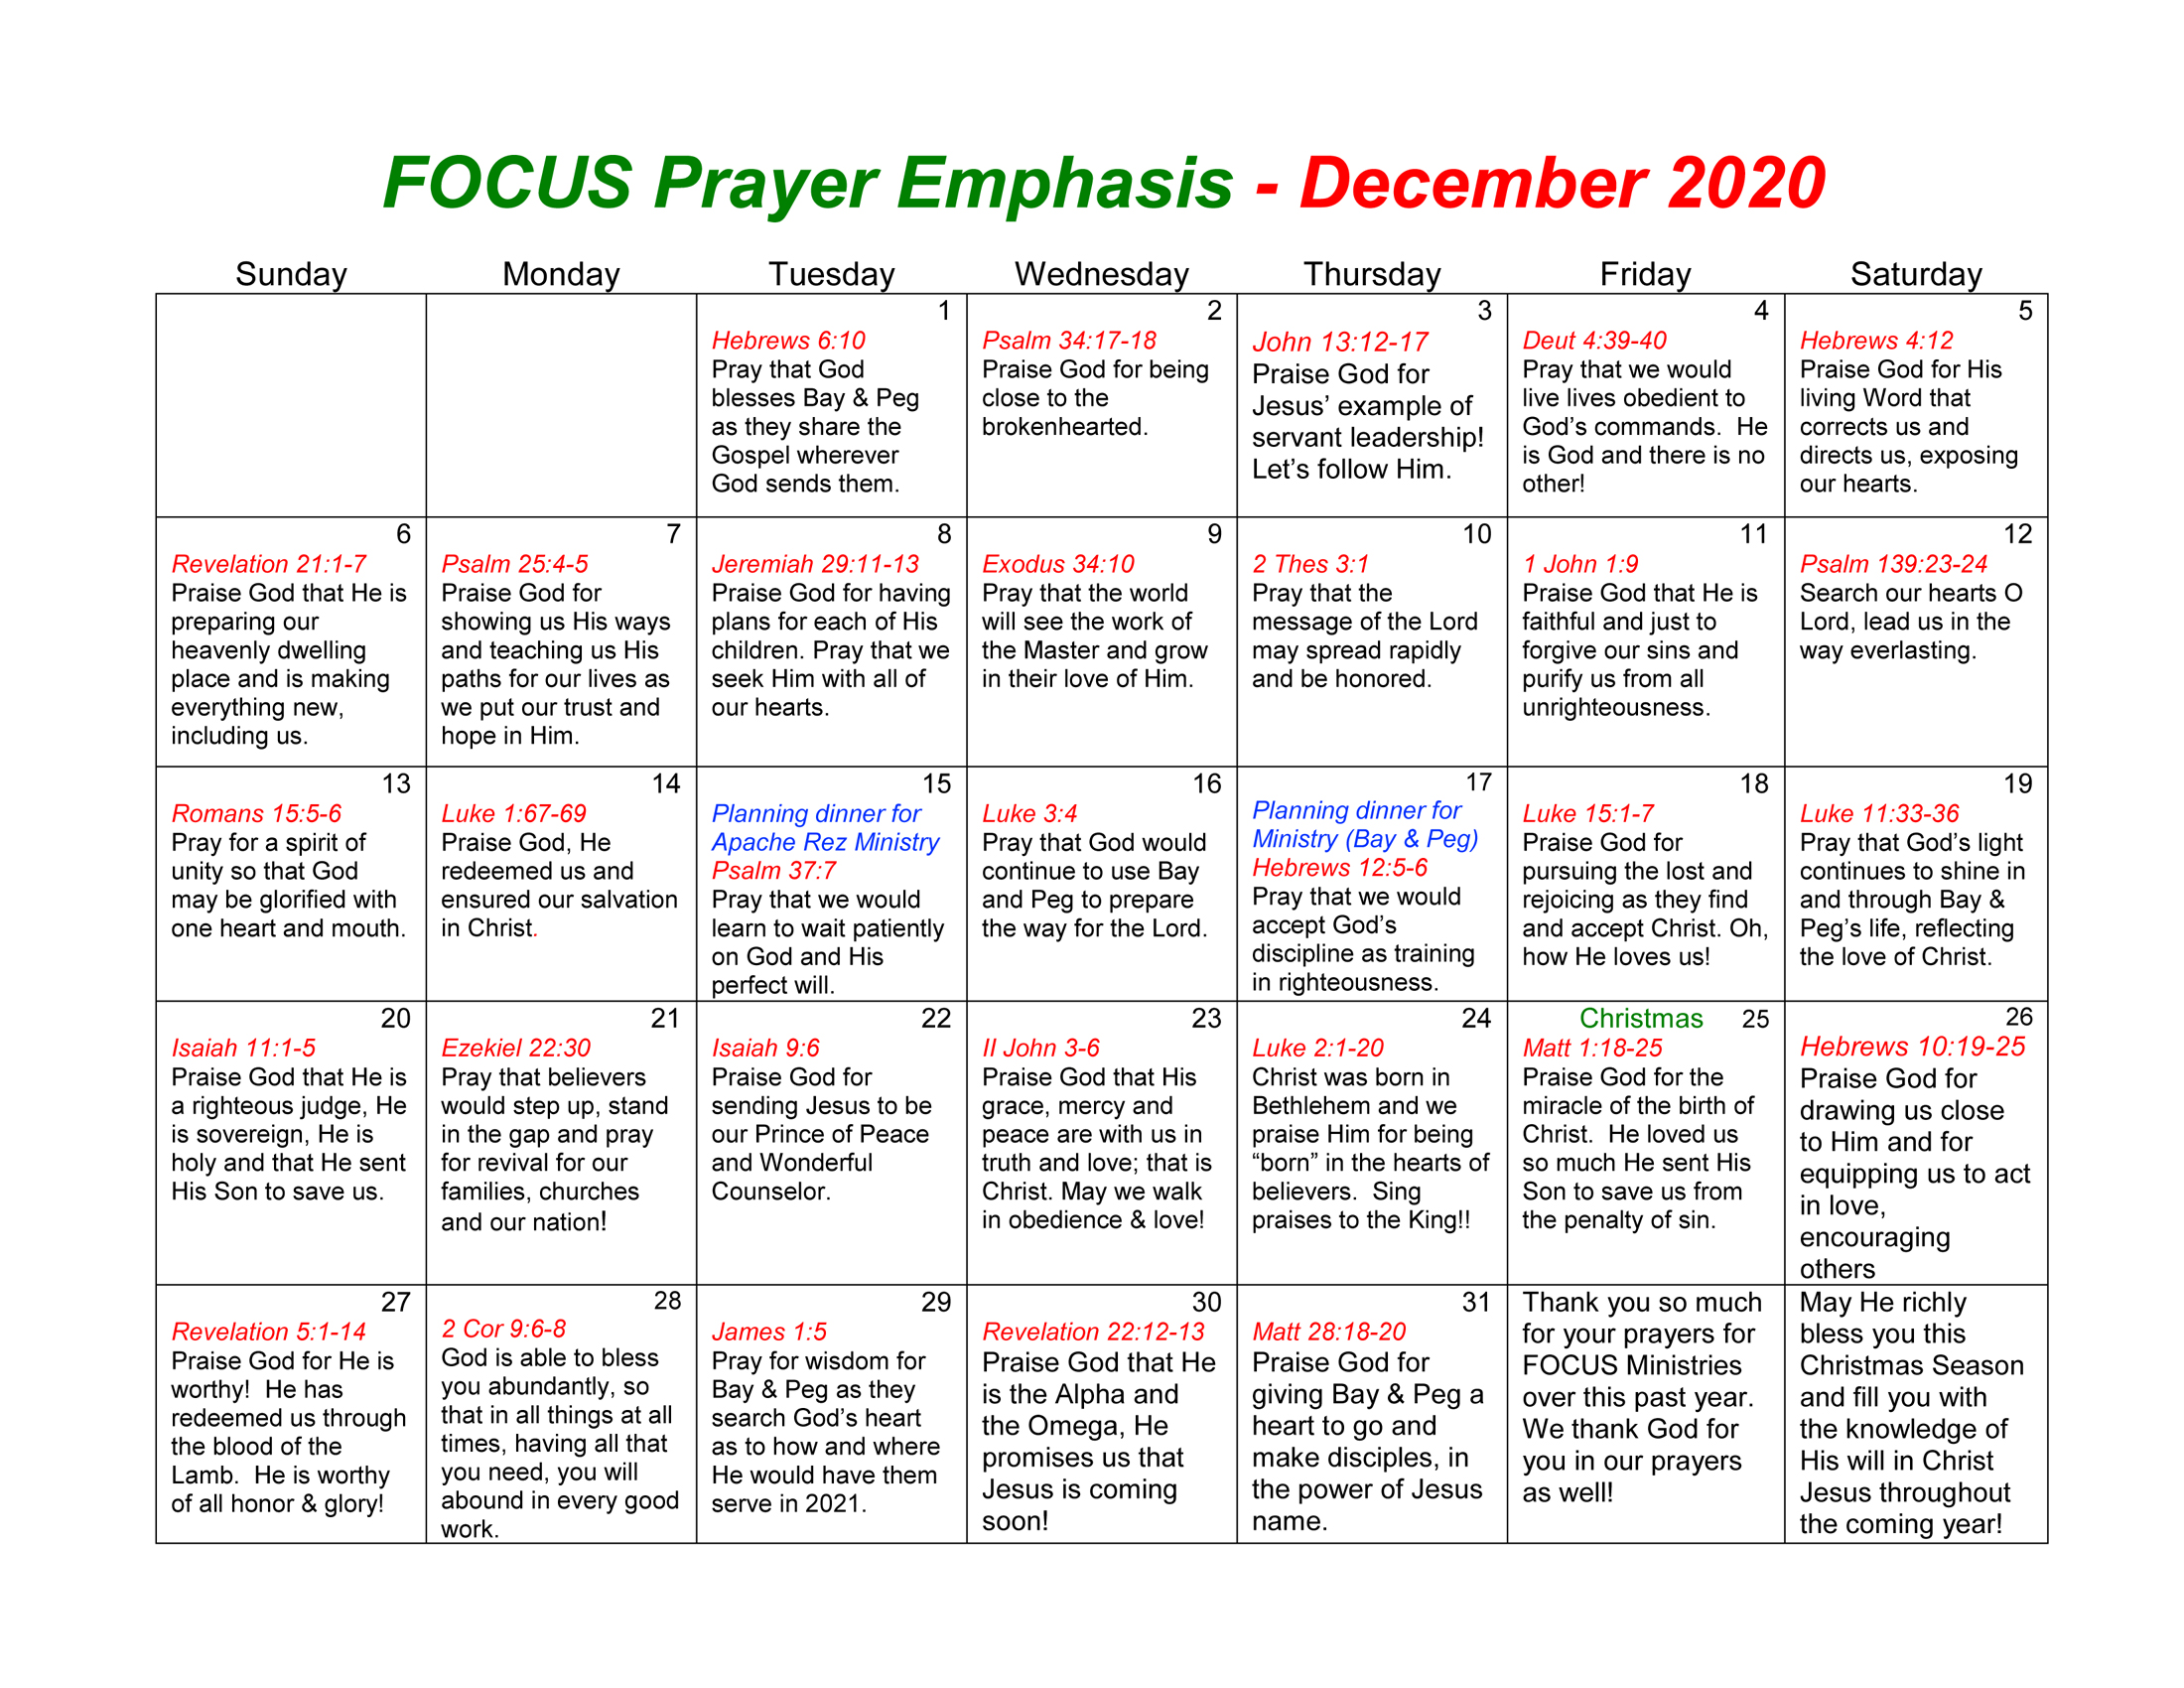 Focus Prayer Calendar Dec 2020 Focus Ministries